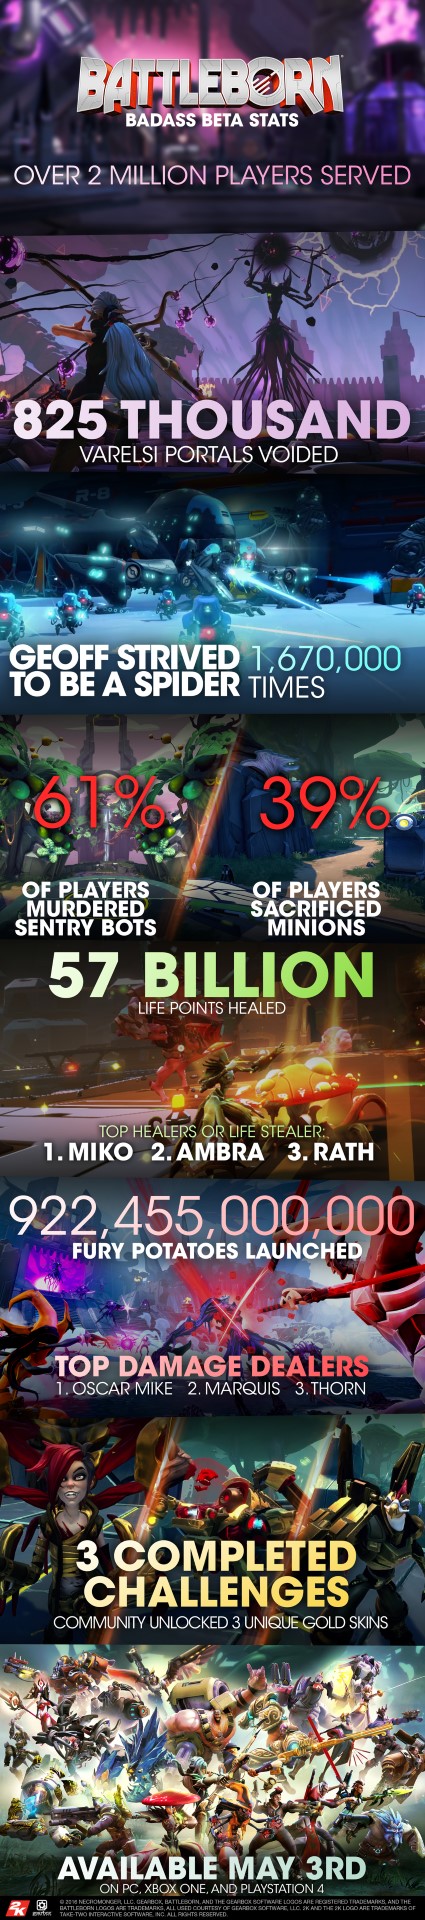 2K_Battleborn_Beta_Infographic